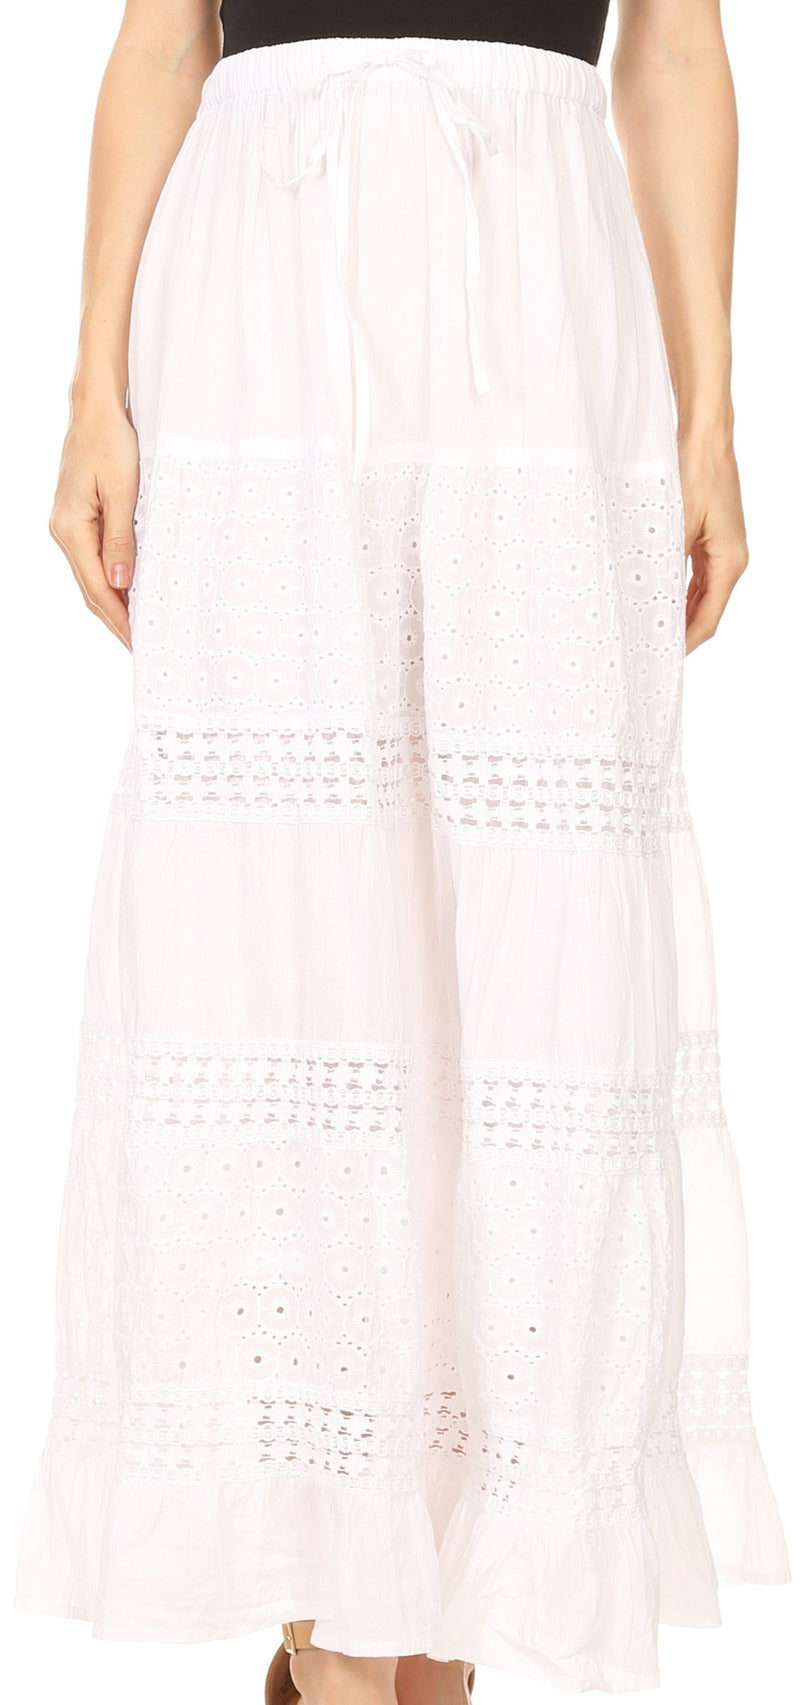 Sakkas Genesis Lightweight Cotton Eyelet Skirt with Elastic Waistband